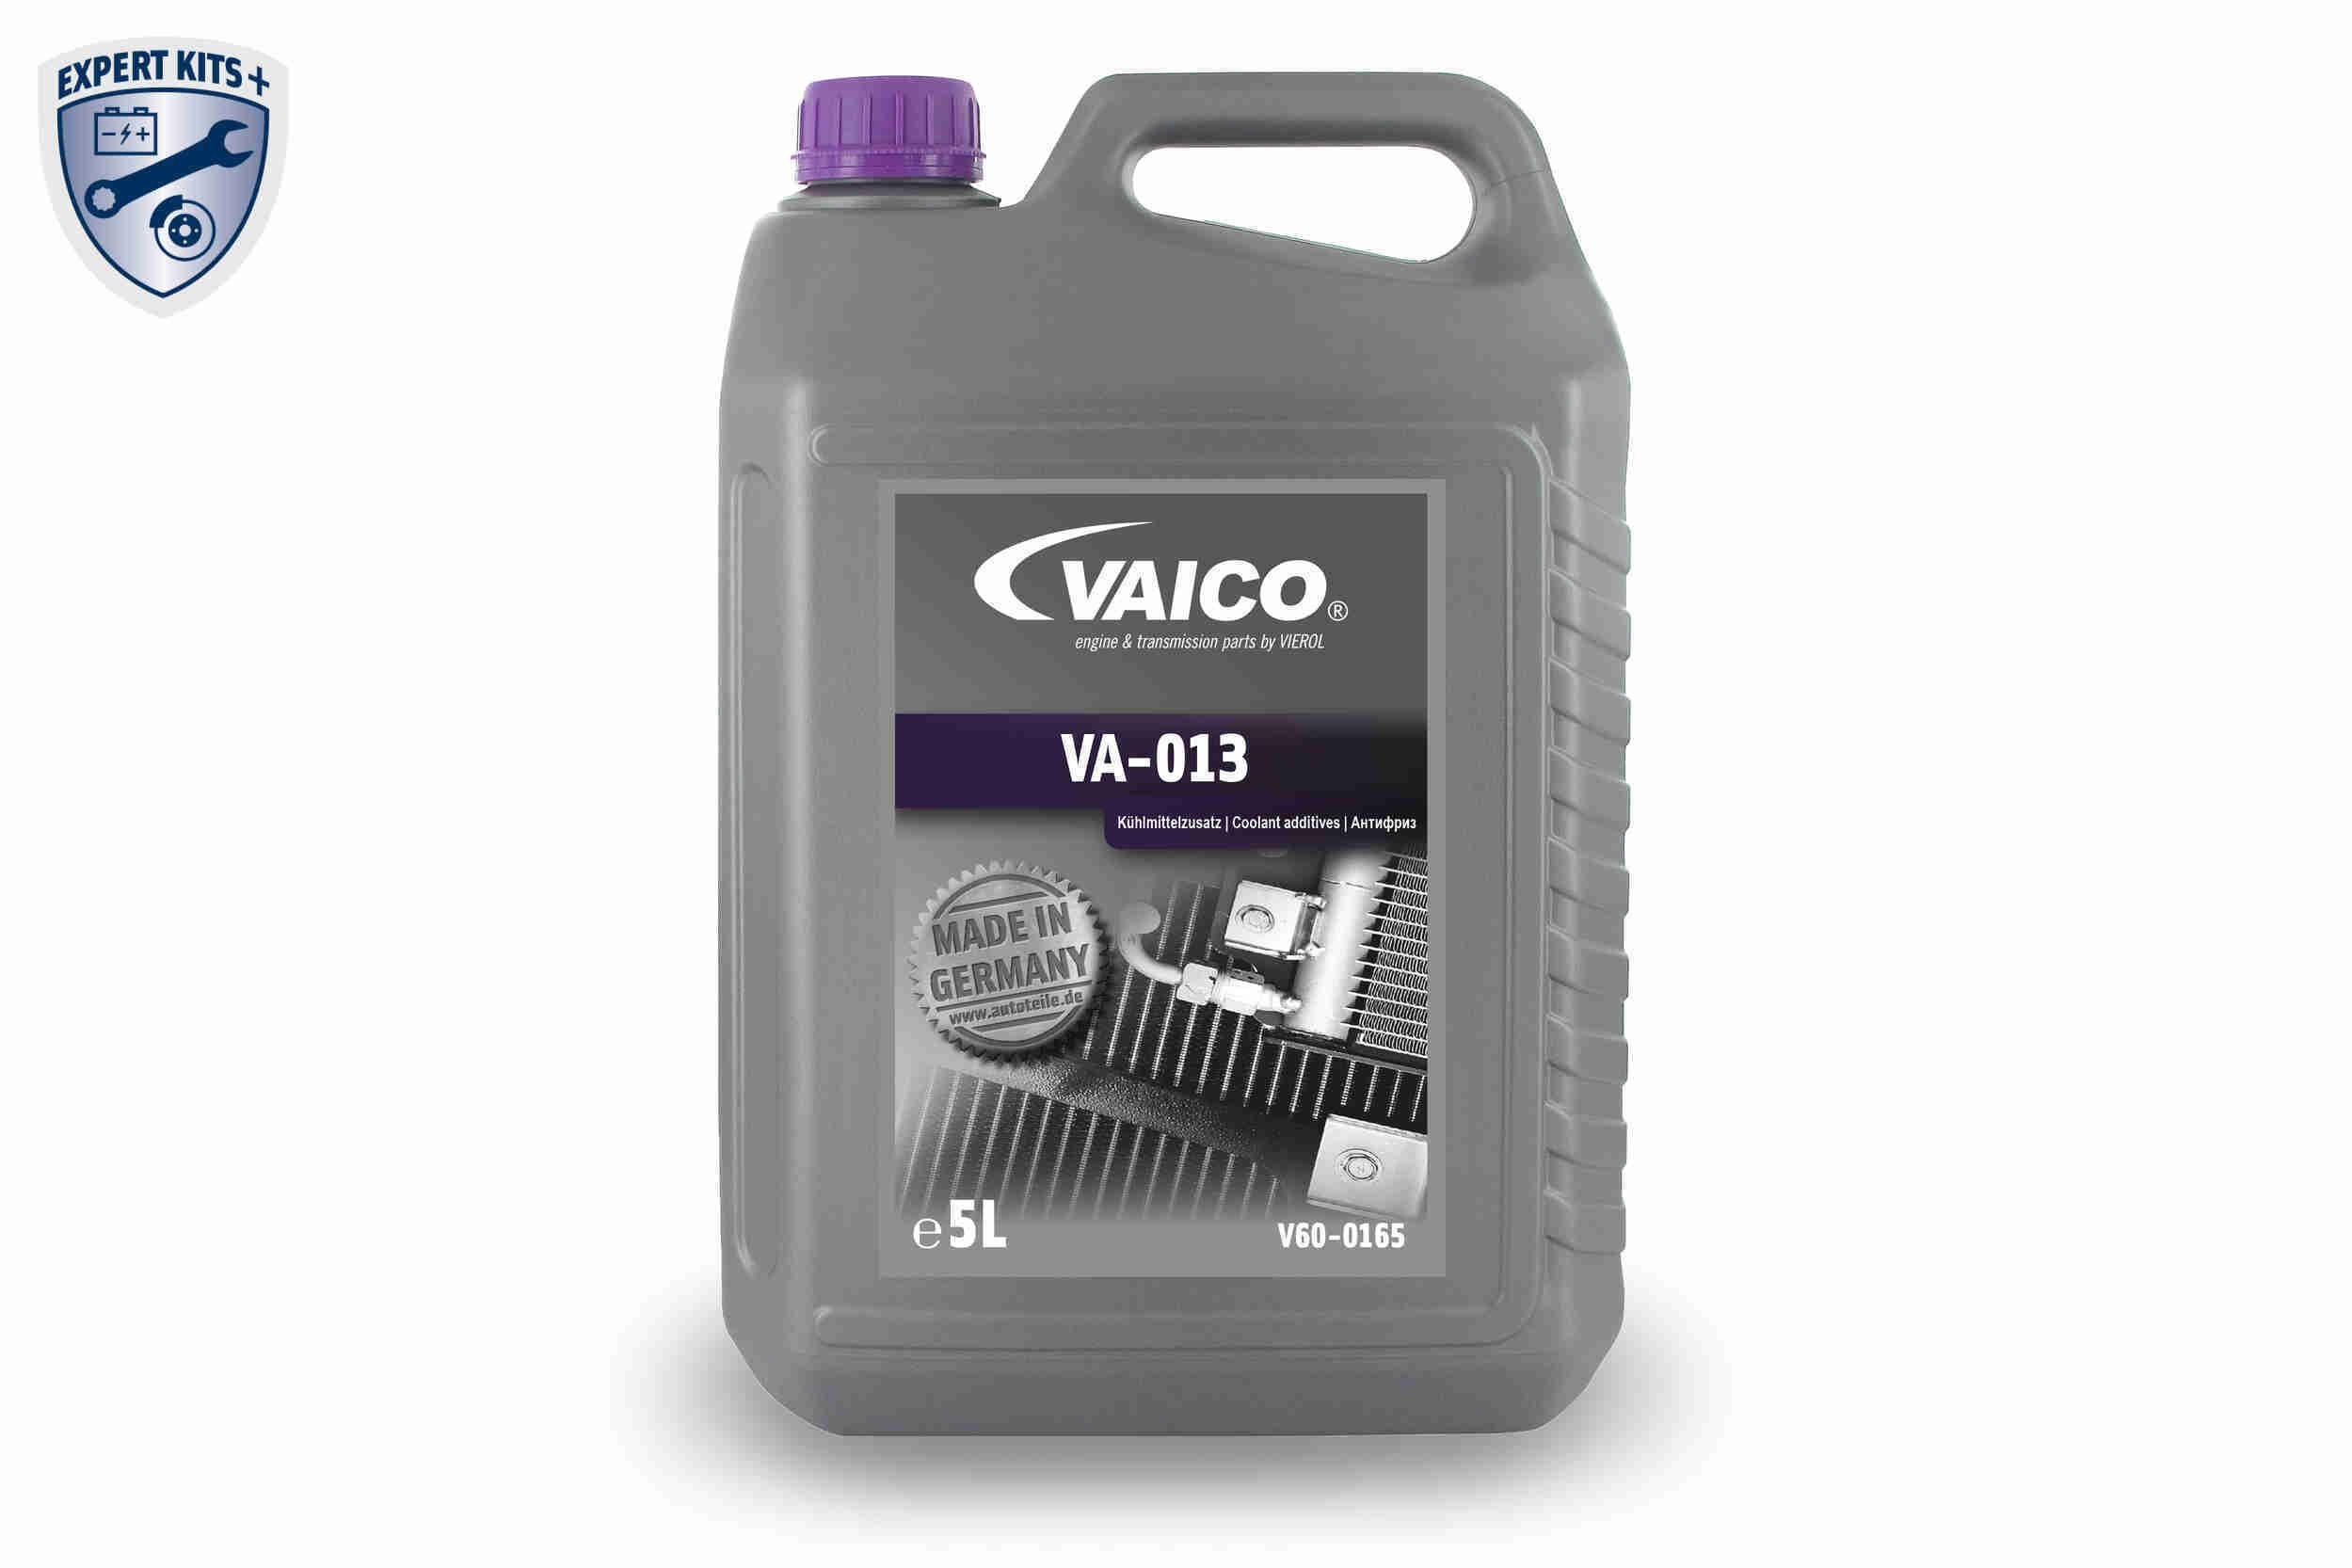 VAICO G13 purple, 5l, -38(50/50), Q+, original equipment manufacturer quality MADE IN GERMANY G13 Coolant V60-0165 buy